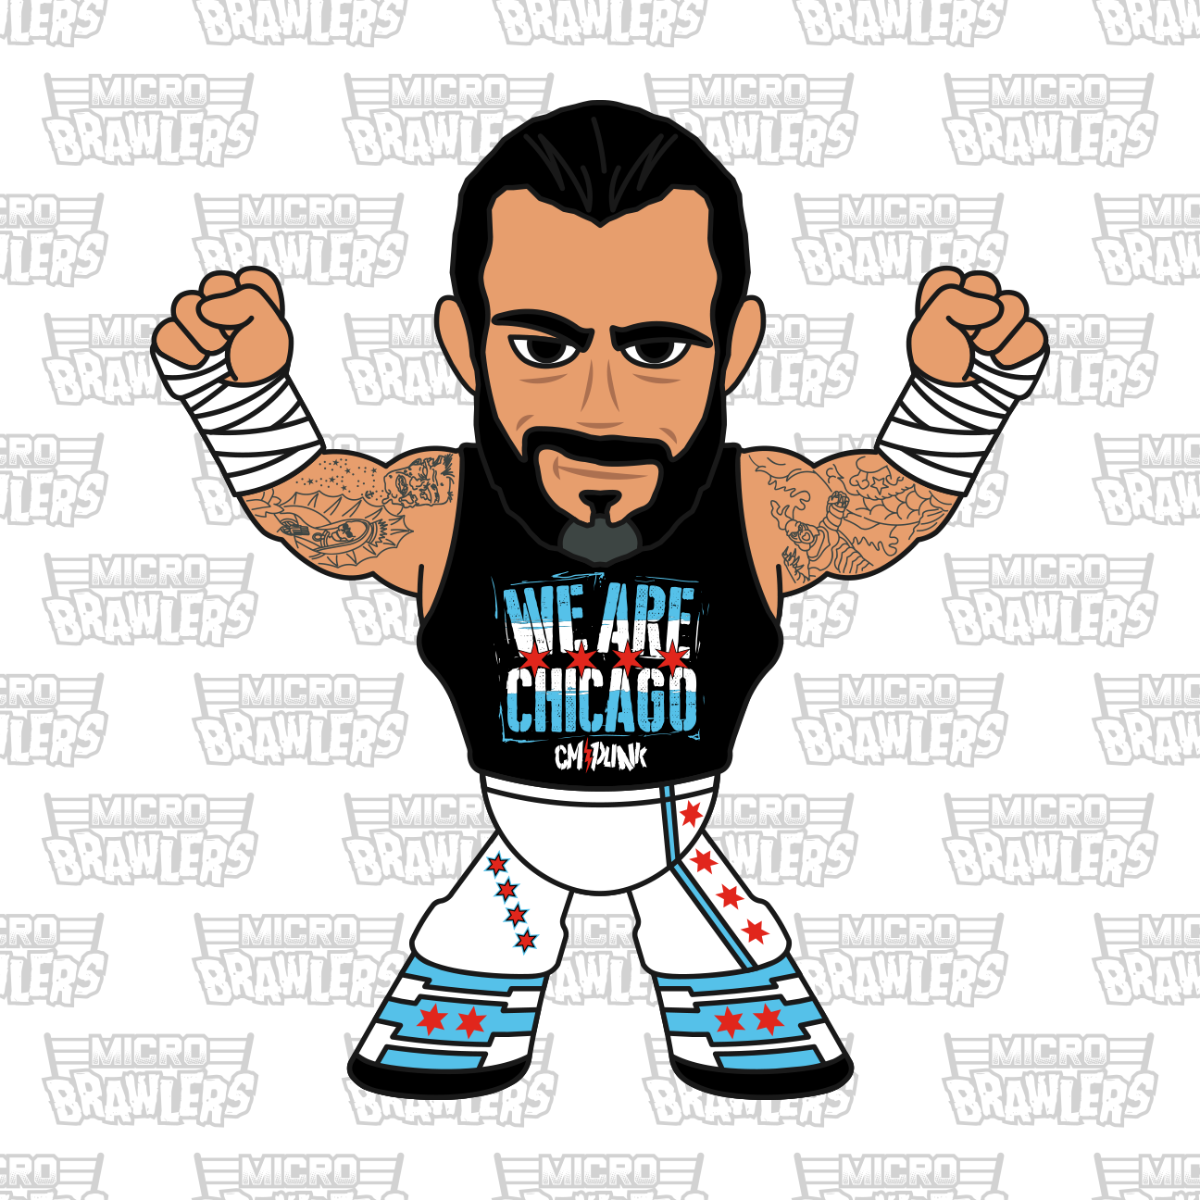 RARE CM Punk Micro Brawler WWE AEW Pro Wrestling Tees